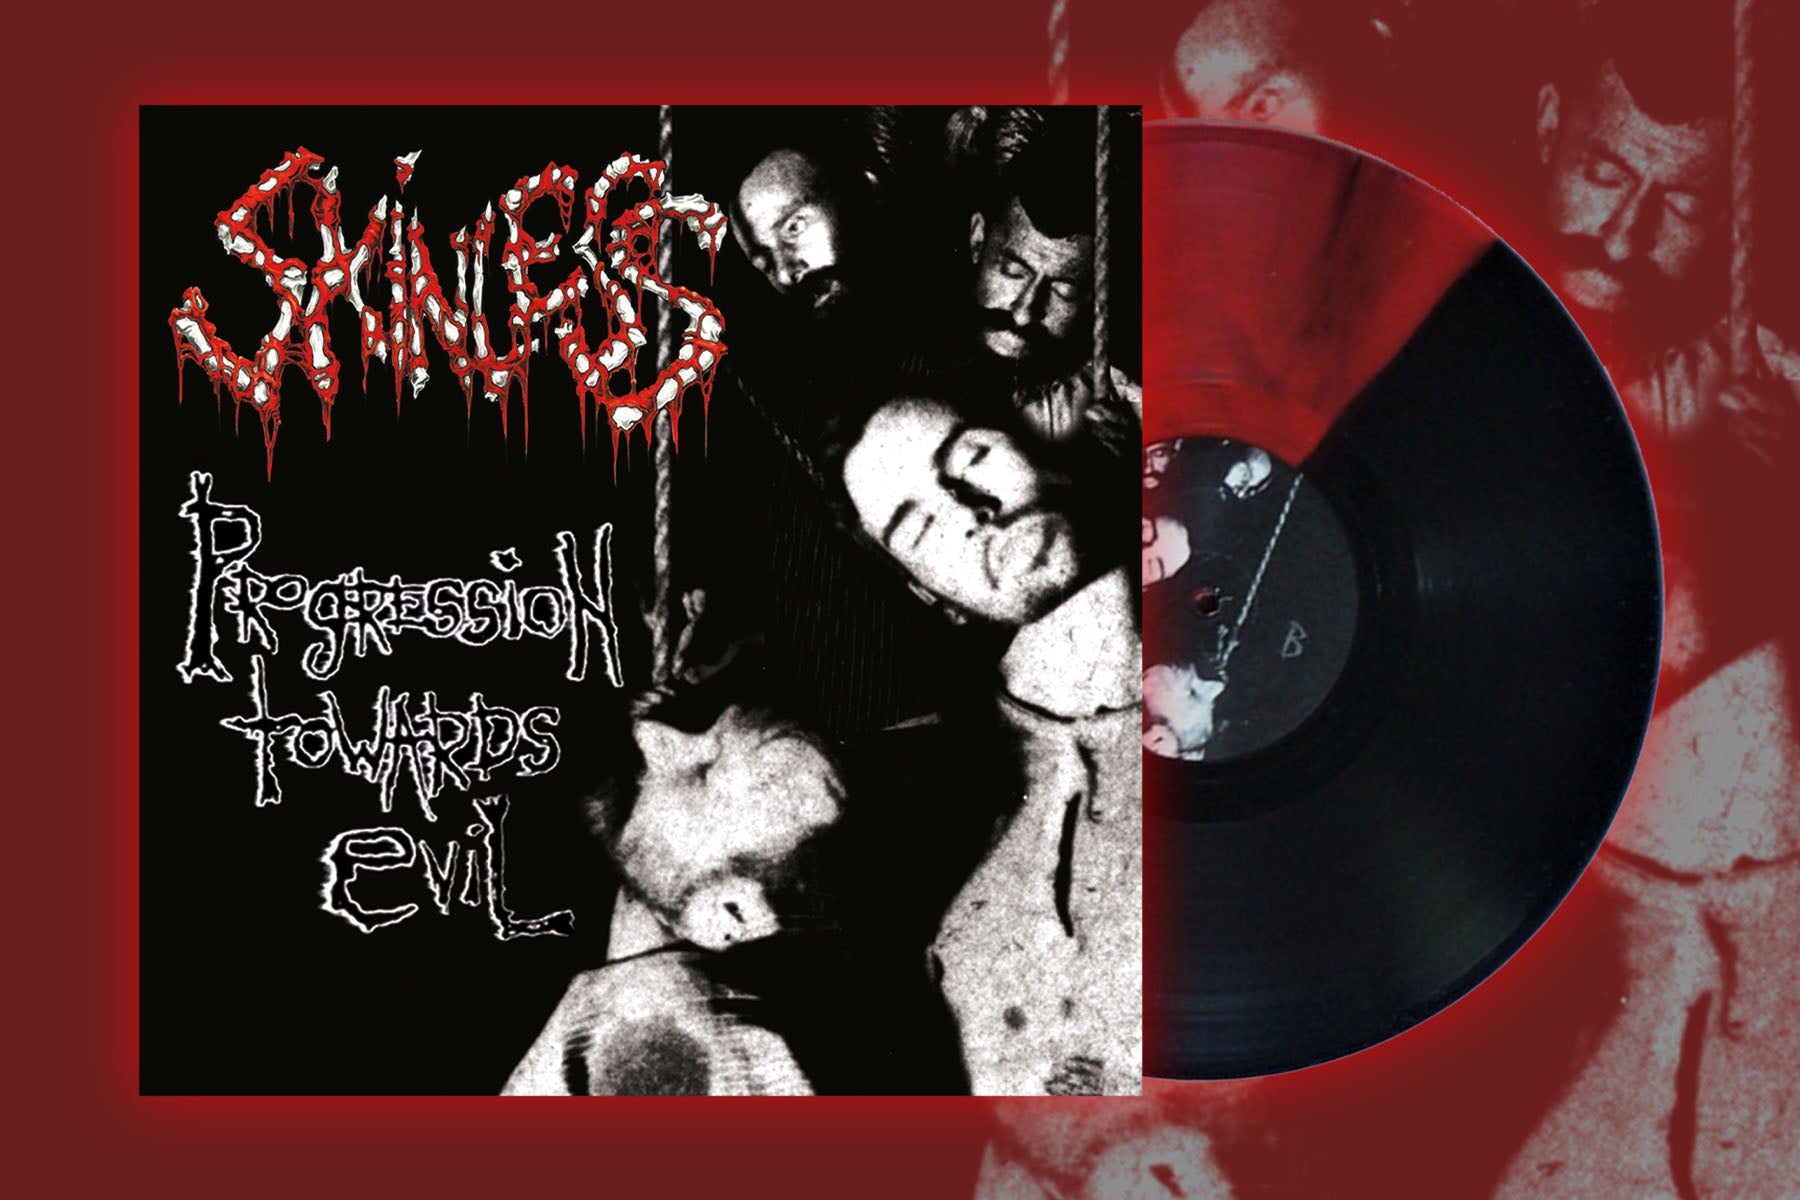 SKINLESS - Progression Towards Evil - LP